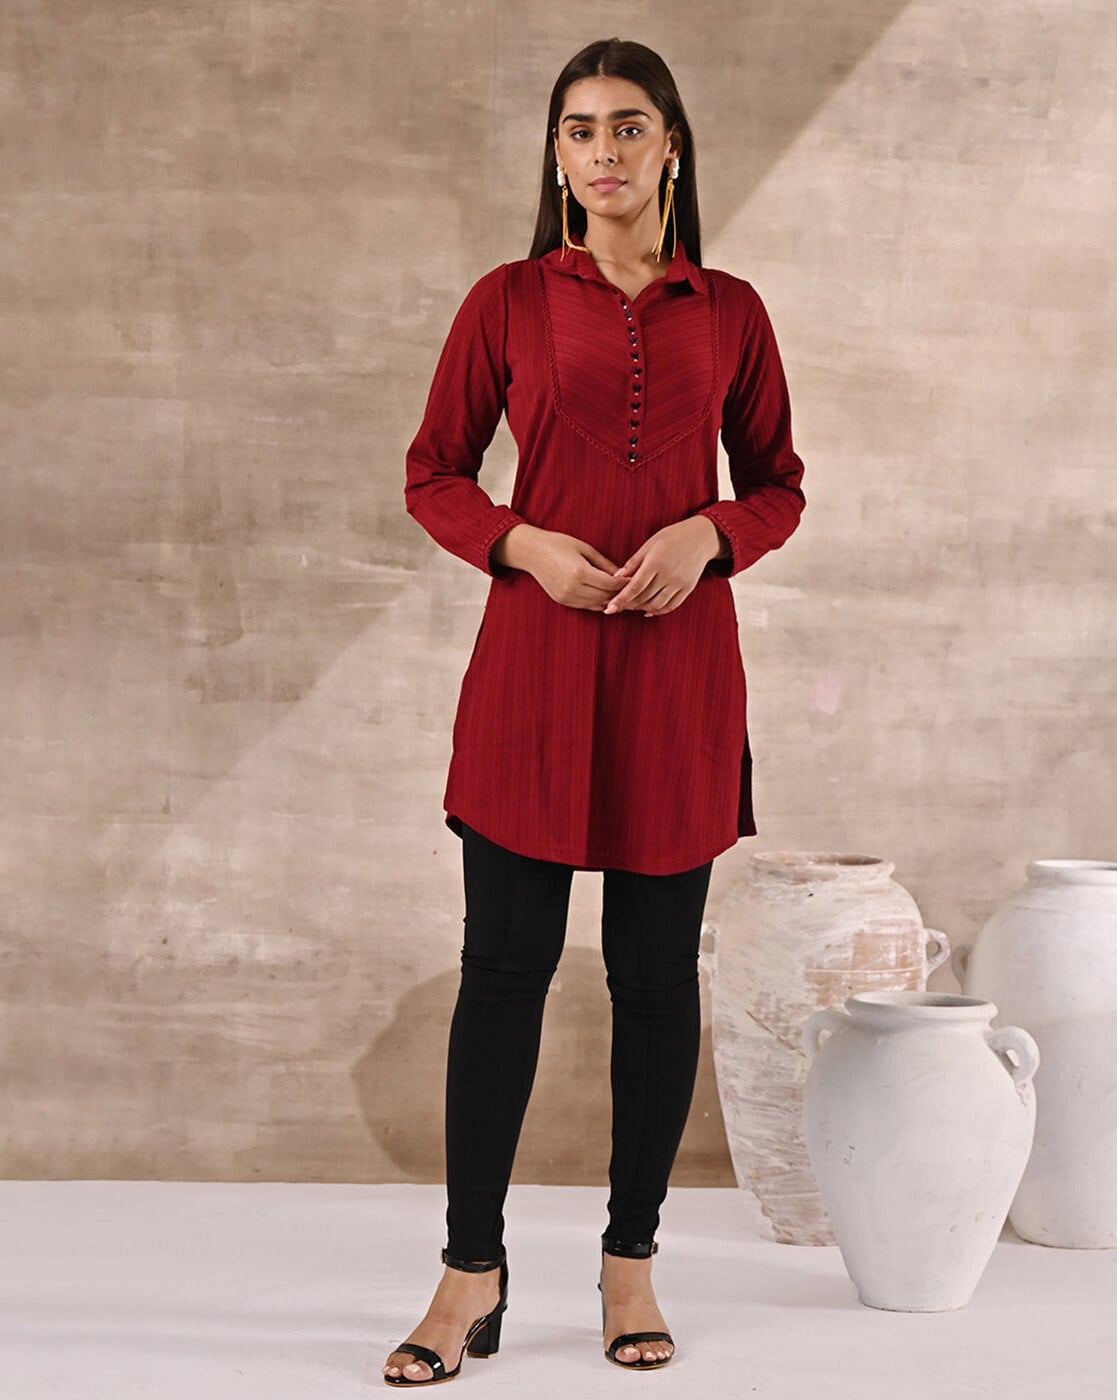 Red Kurtis Designs | Latest Red Color Kurta for Women — Her Kurti Shop